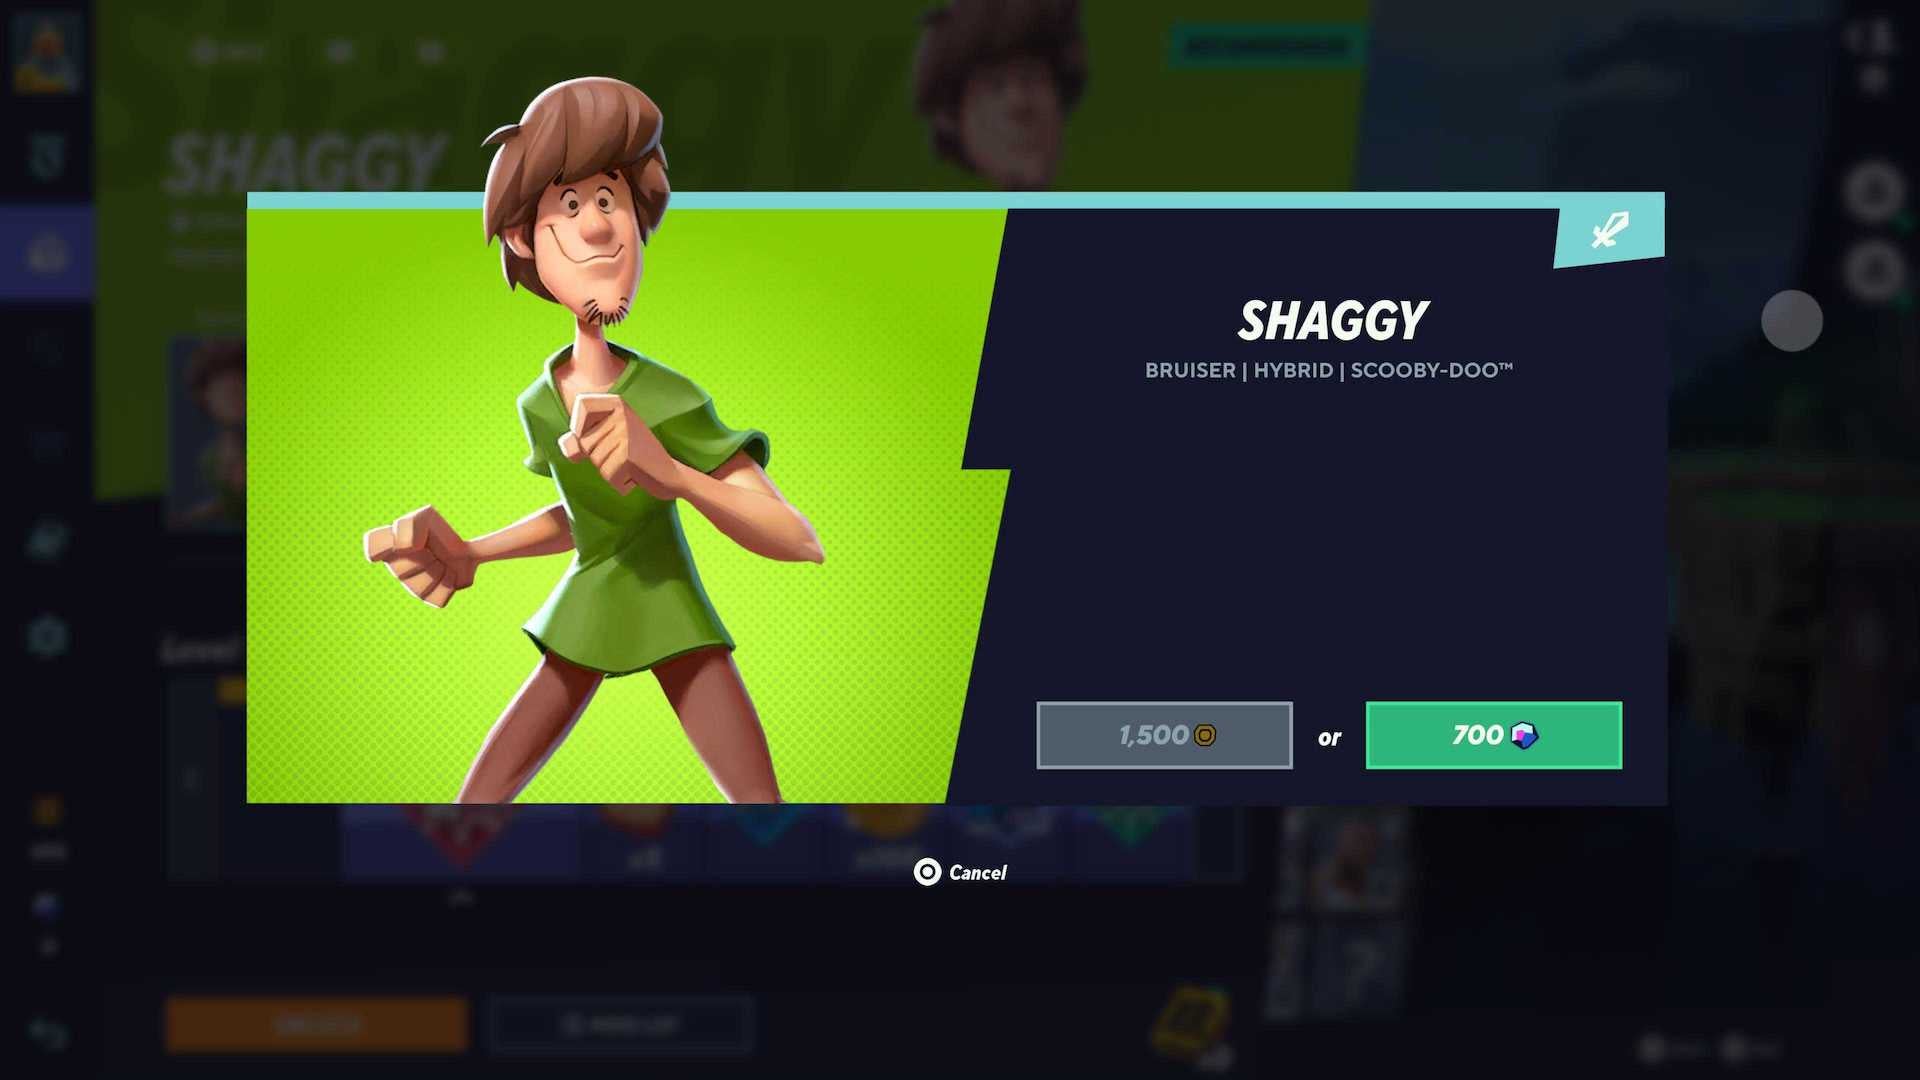 Shaggy's unlock screen in MultiVersus